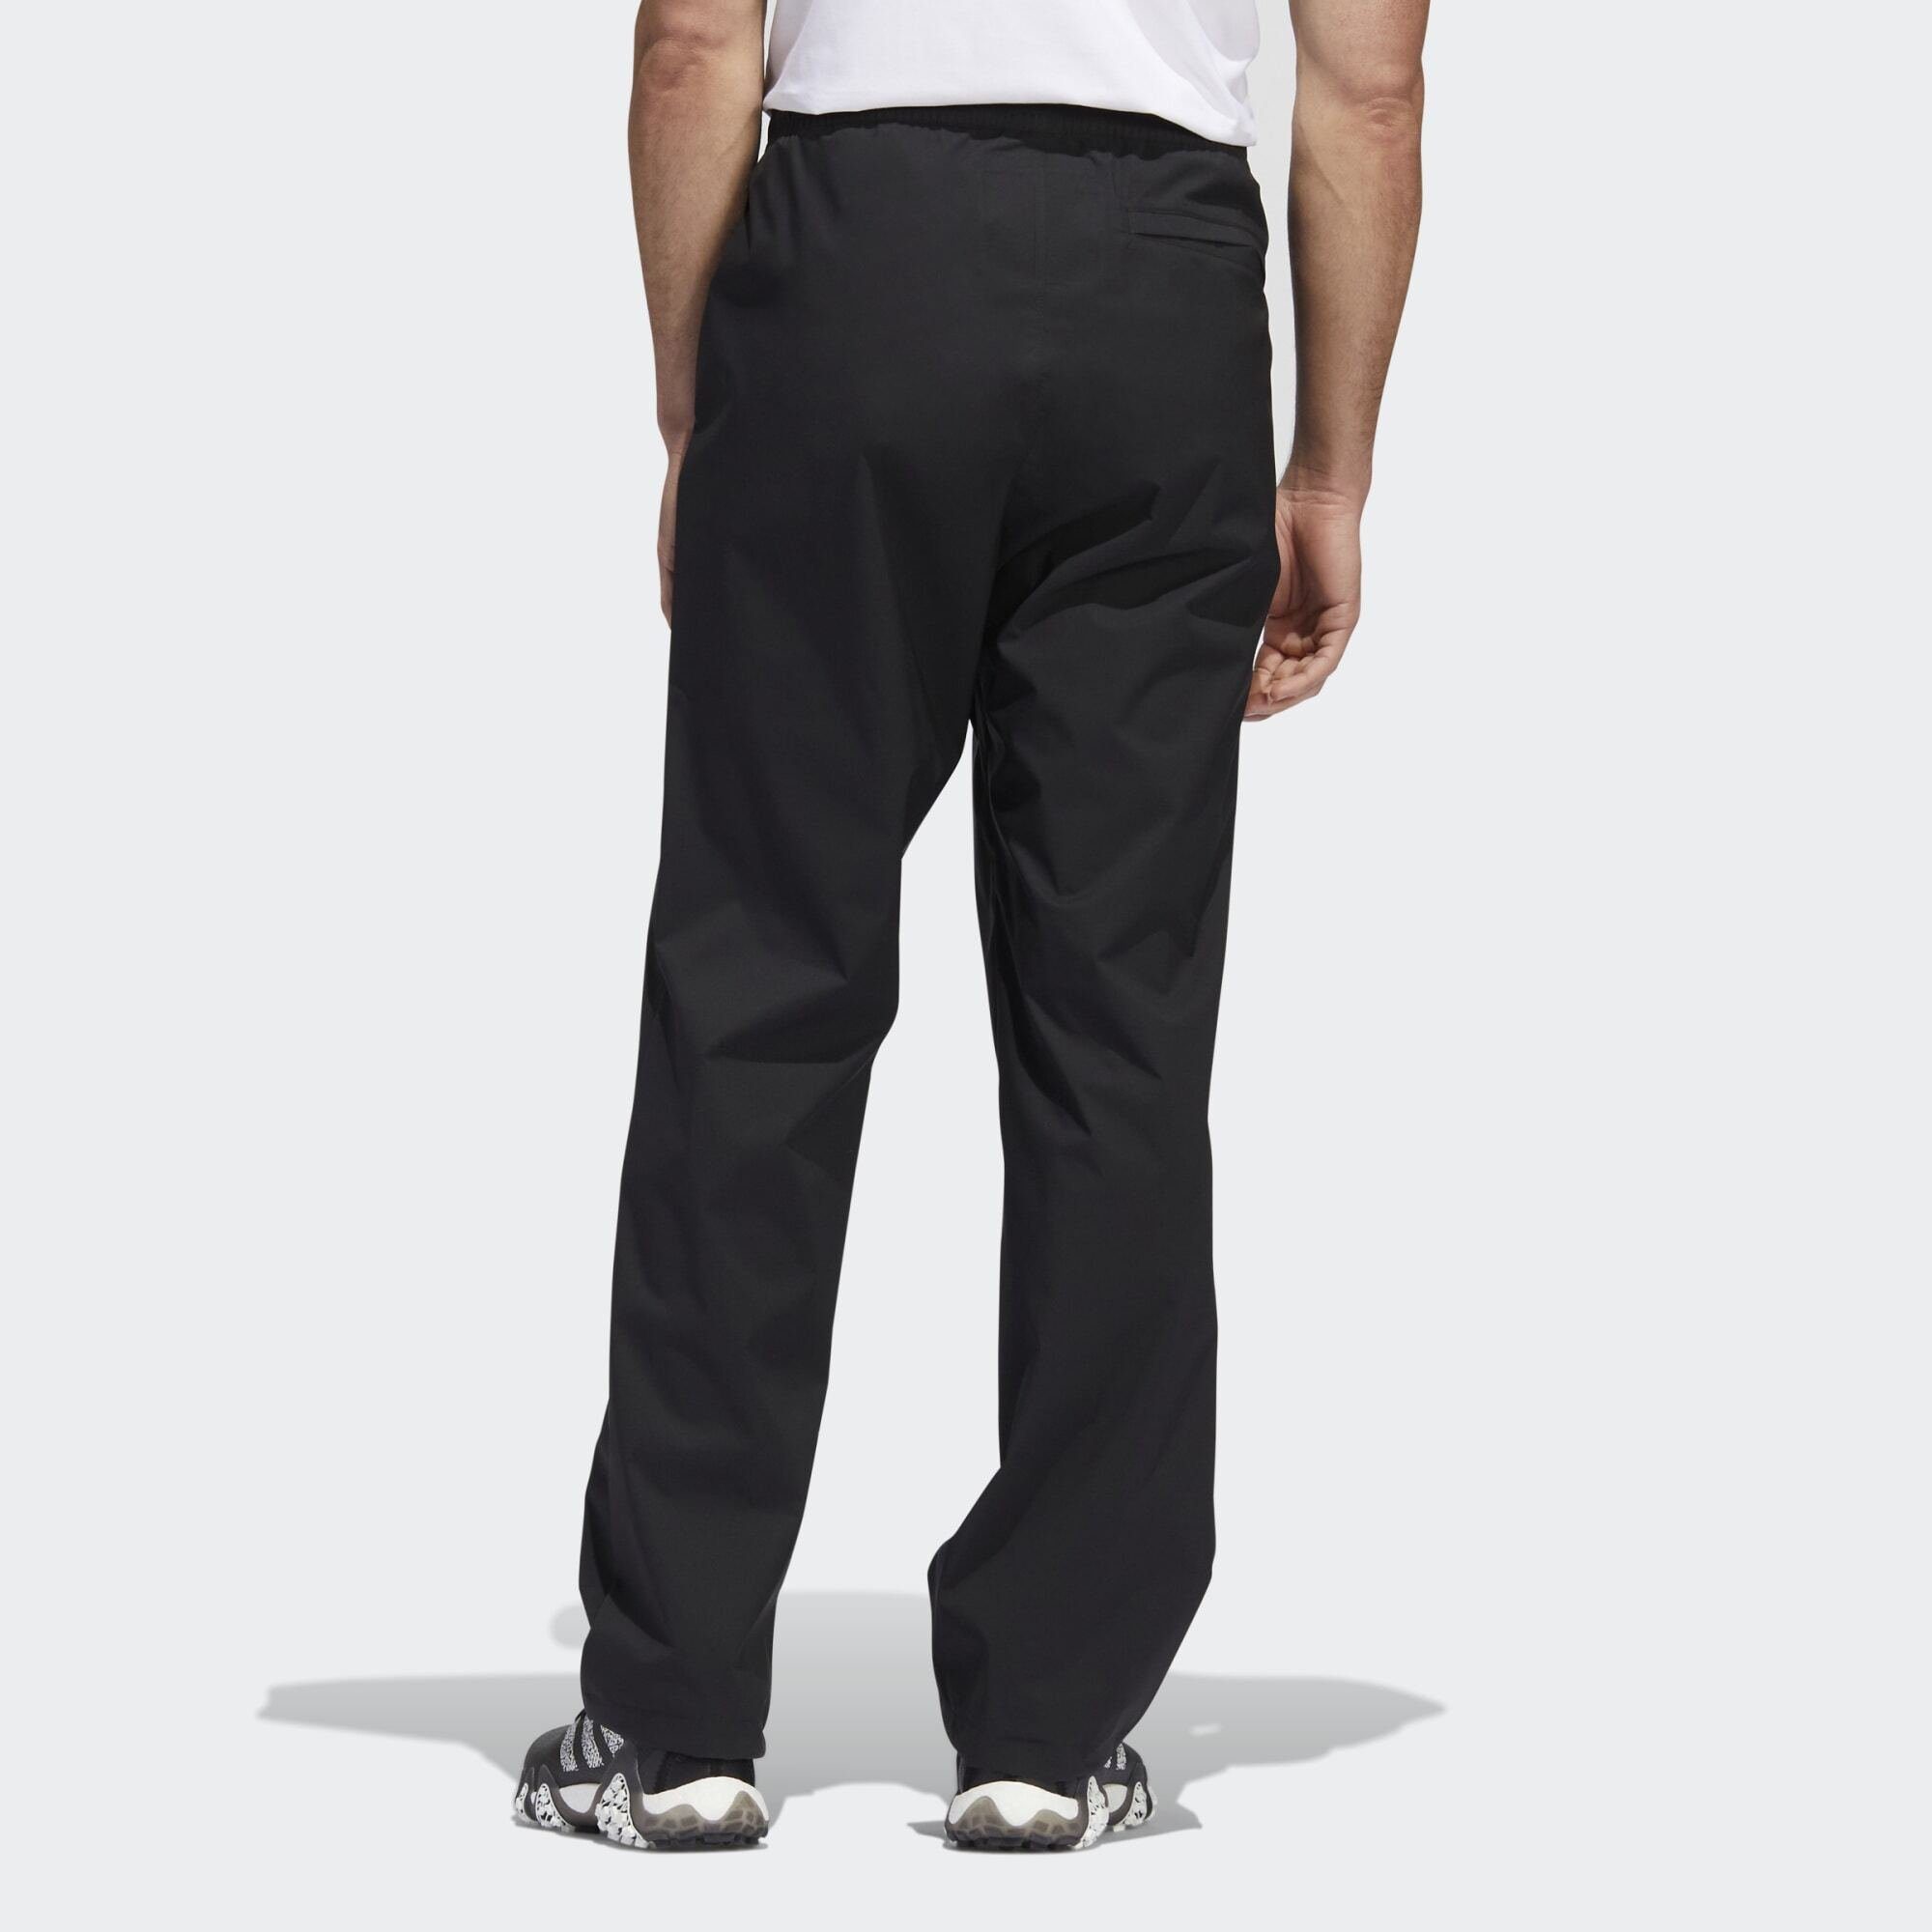 PROVISIONAL GOLFHOSE Golfhose Performance Black adidas